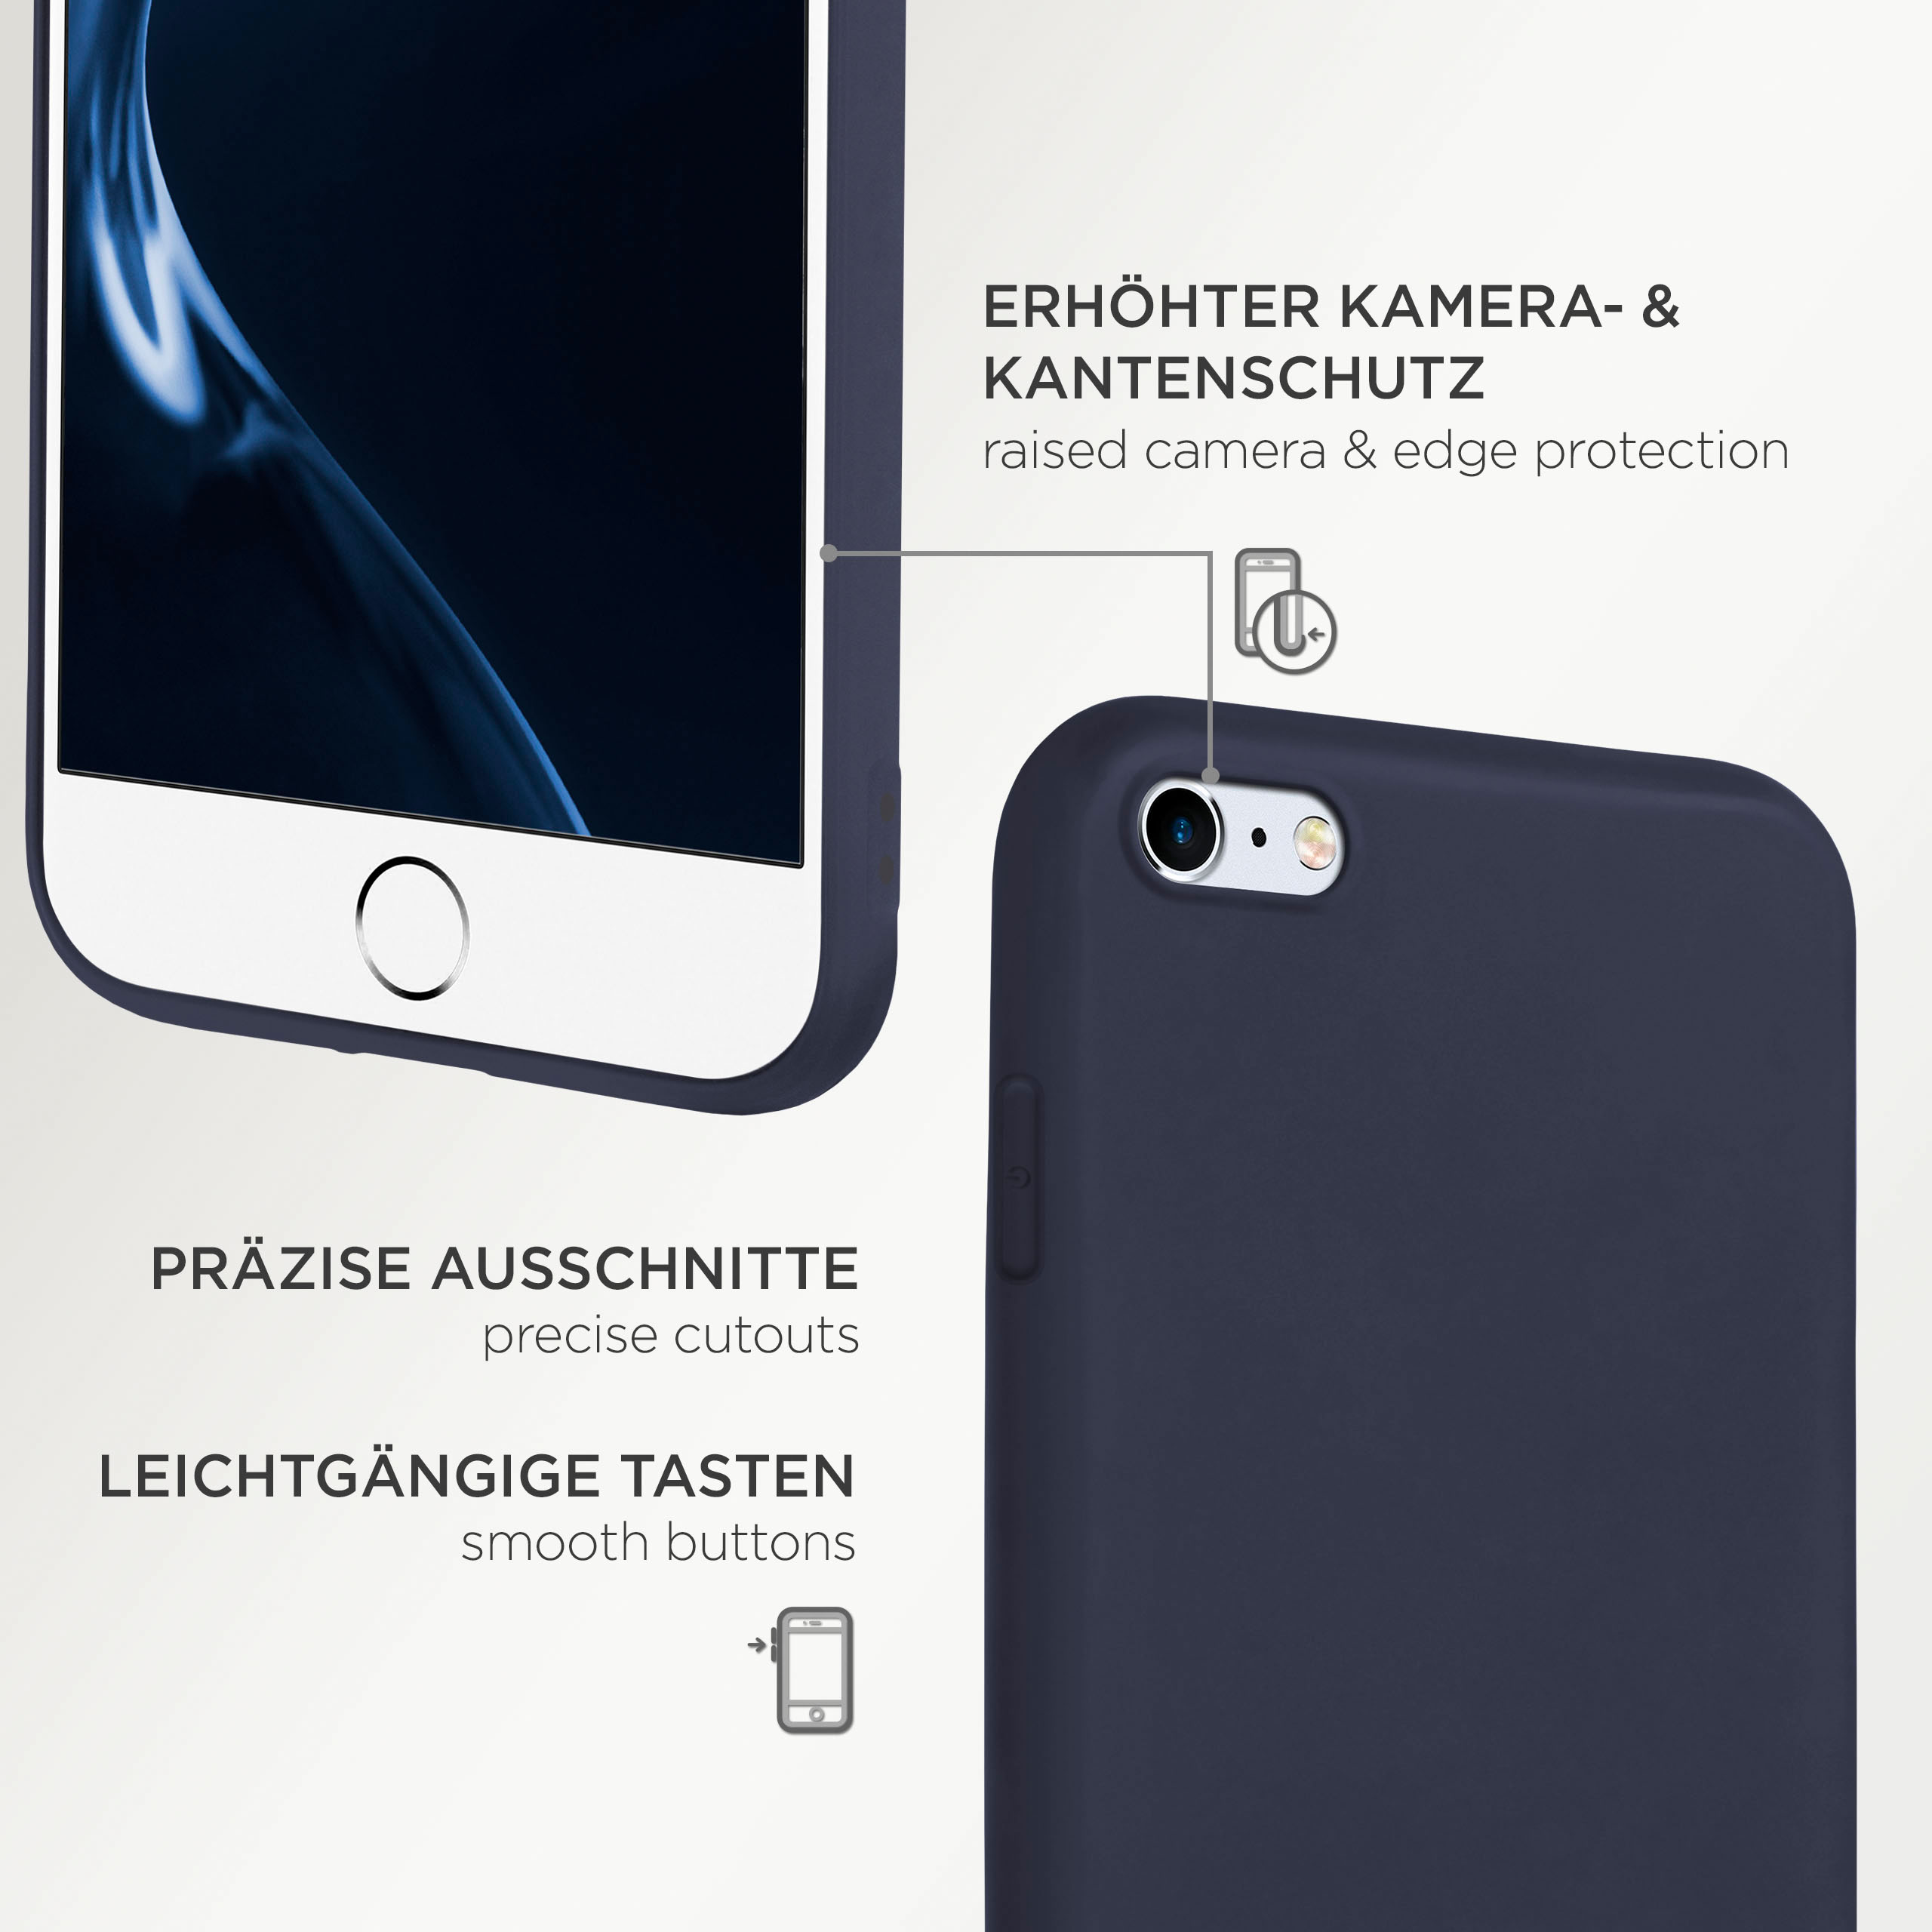 ONEFLOW SlimShield Pro Case, Backcover, iPhone 6, / Blau 6s Apple, iPhone